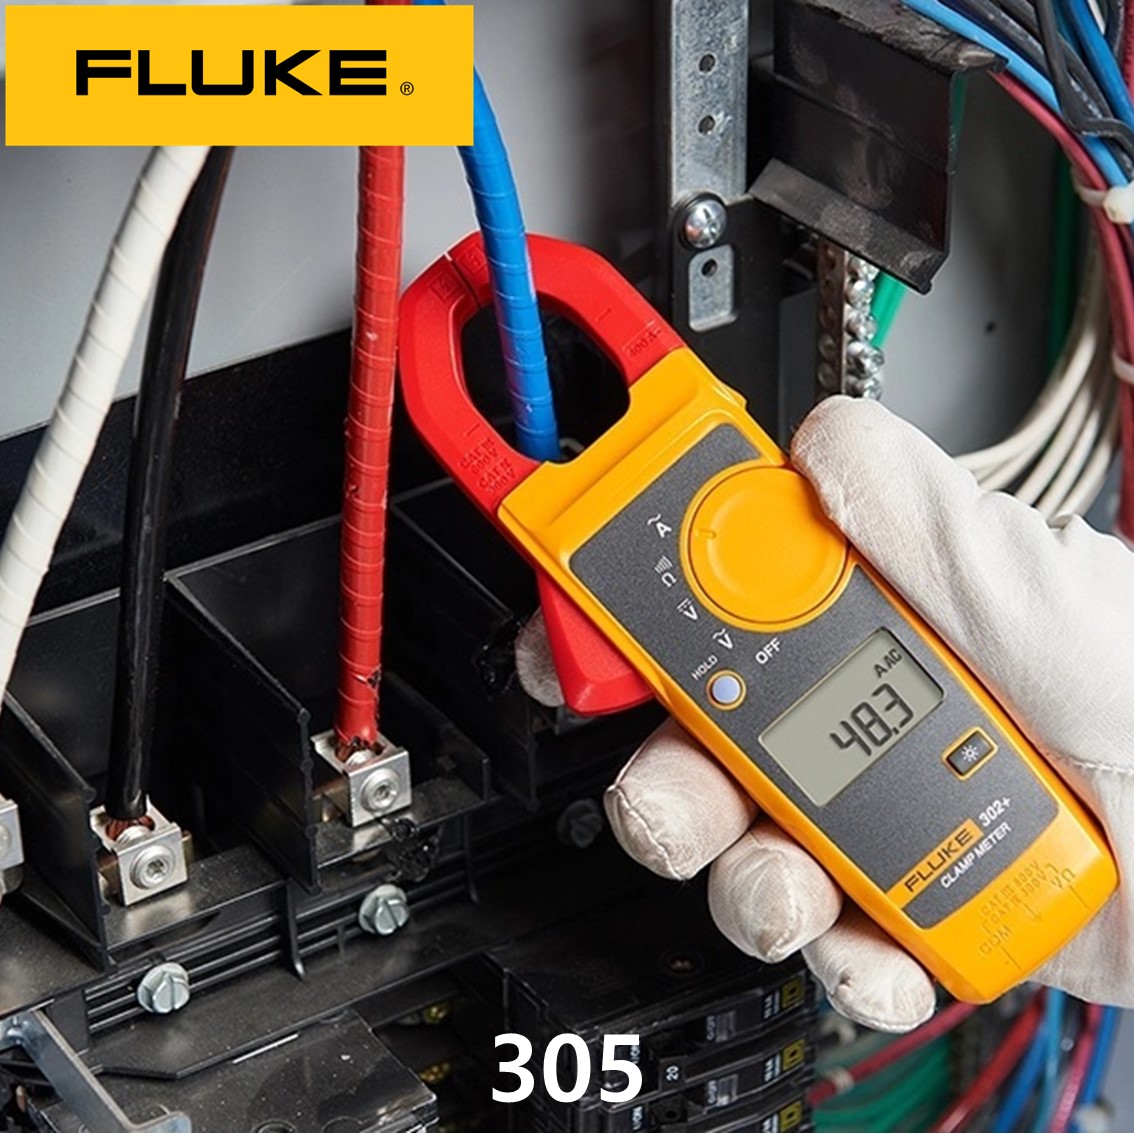 [ FLUKE 305 / APAC ] 정품 플루크 디지털 클램프미터,후크미터, 후크메타 1000A AC